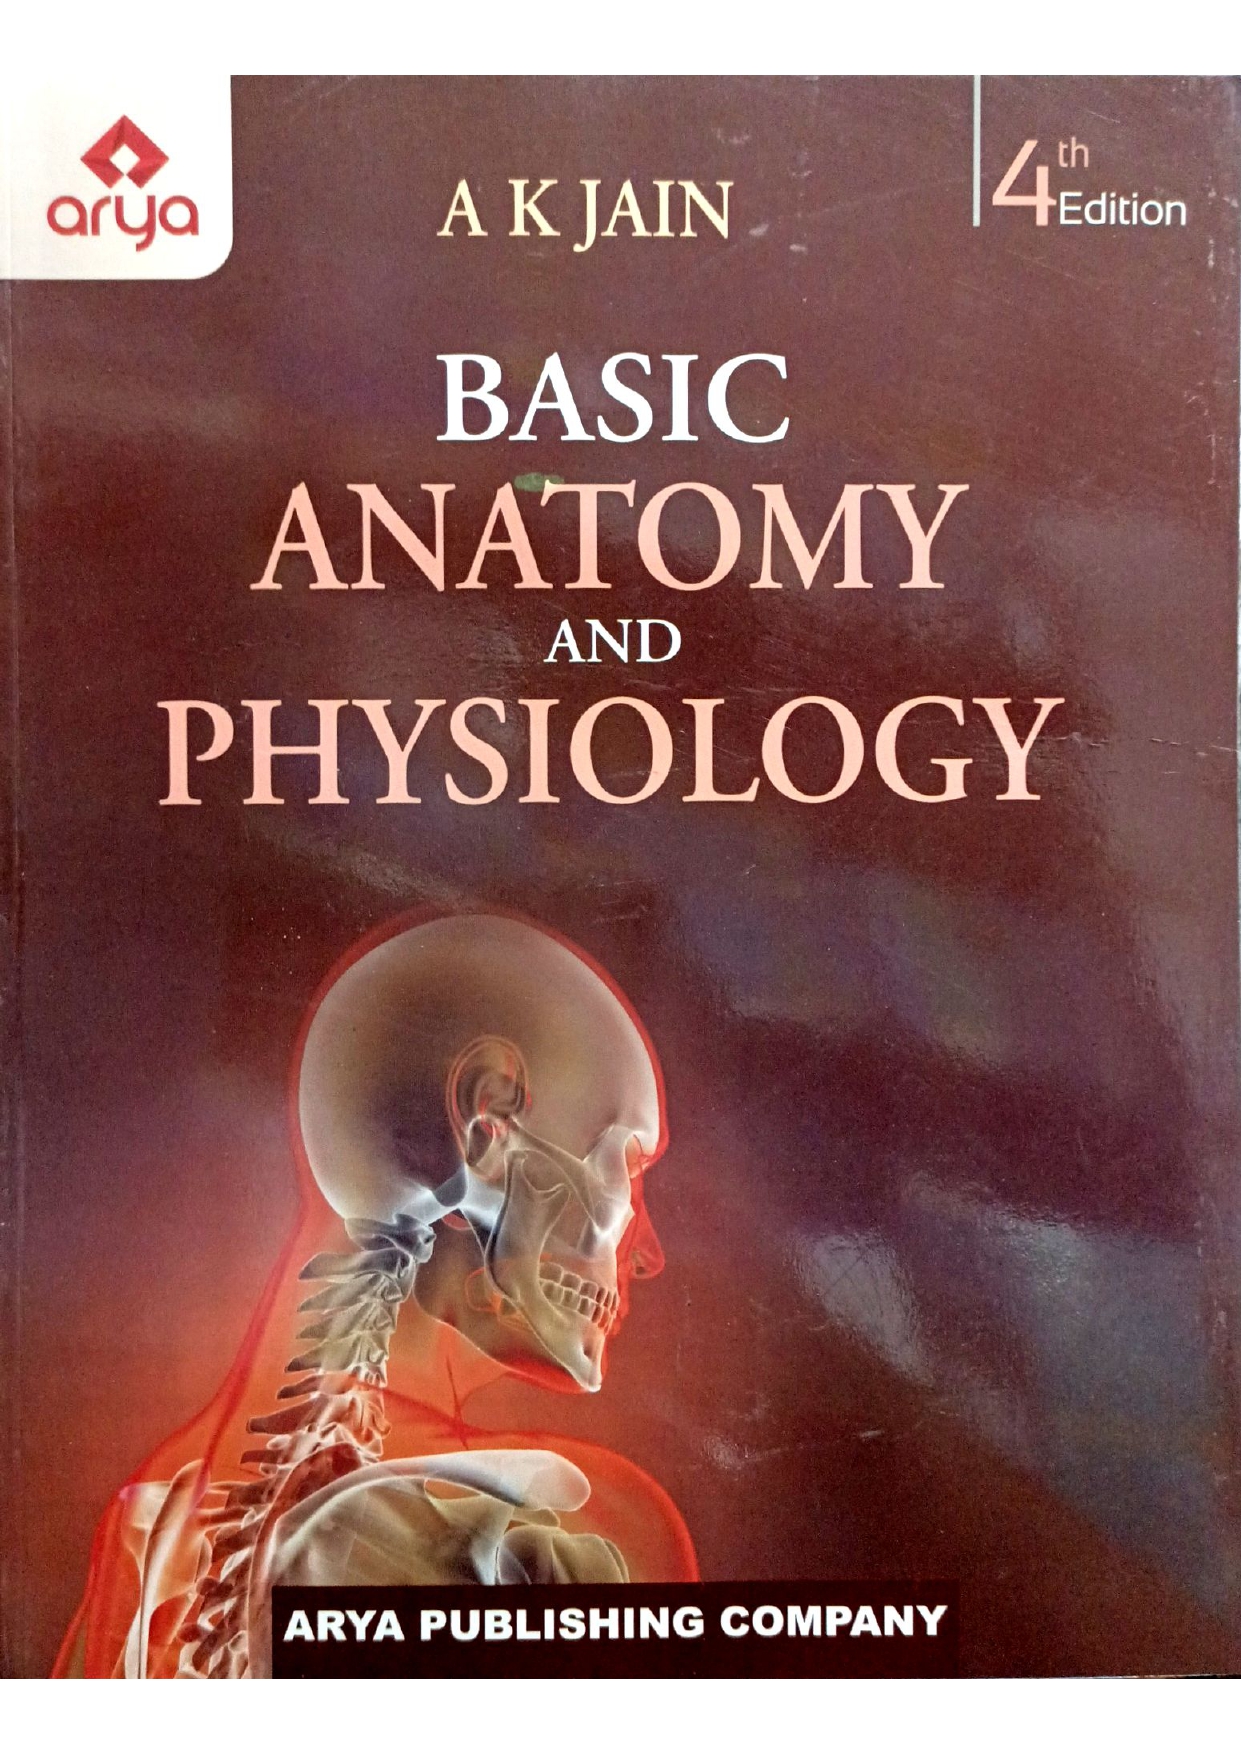 Basic Anatomy And Physiology